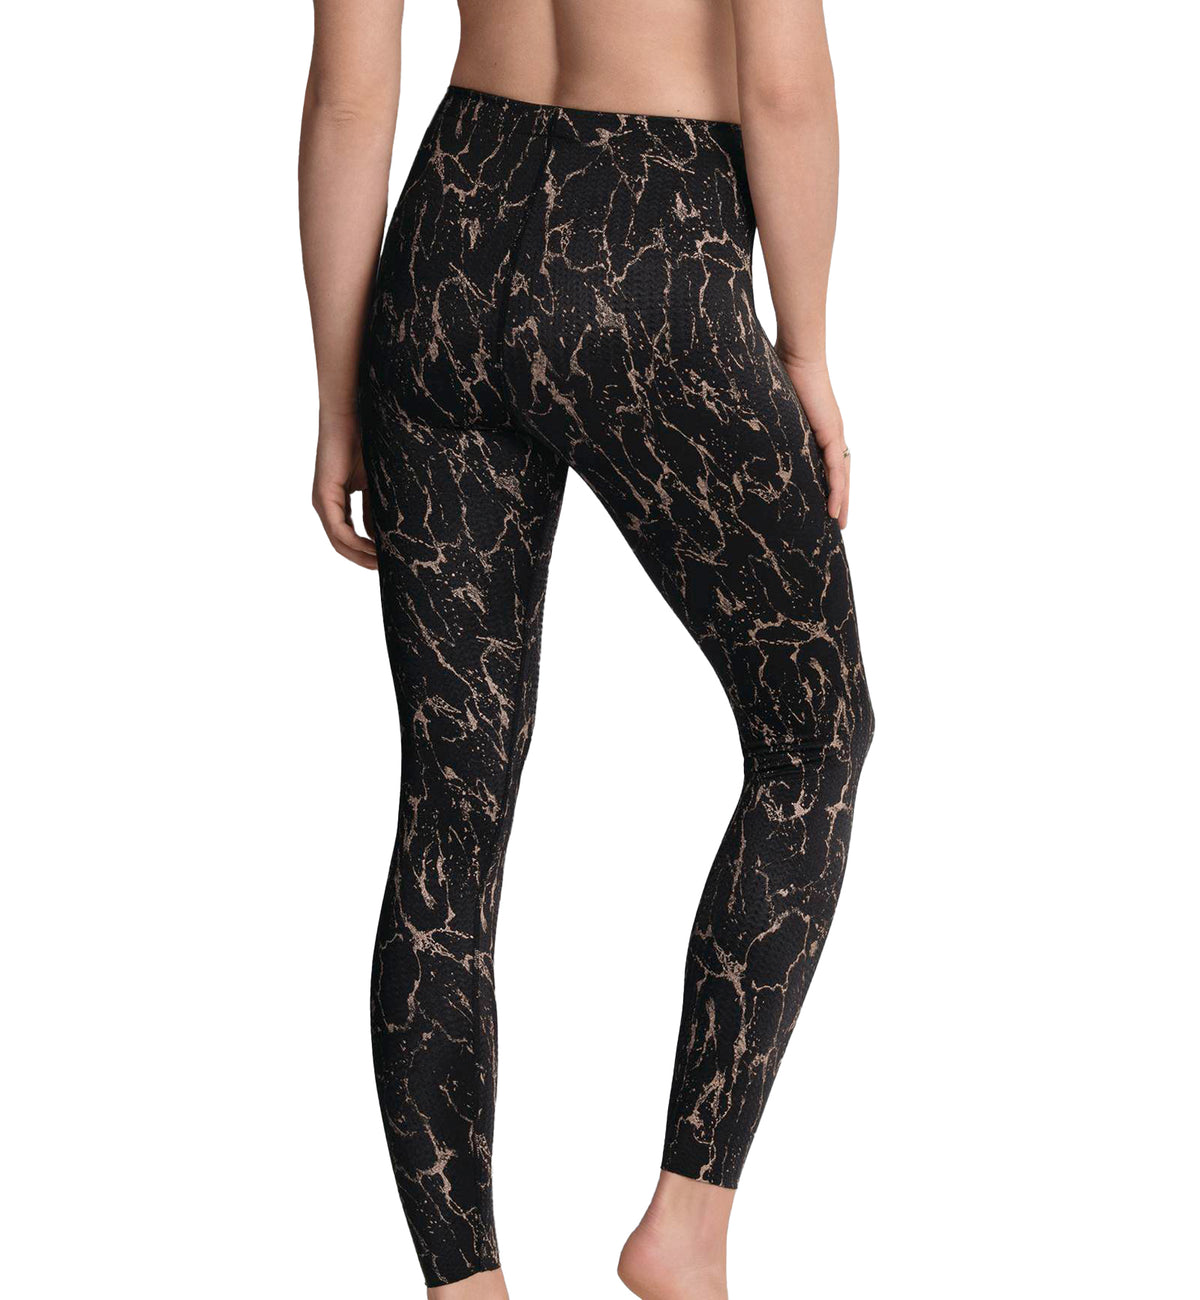 Sports Leggings - Taupe/leopard print - Ladies | H&M US